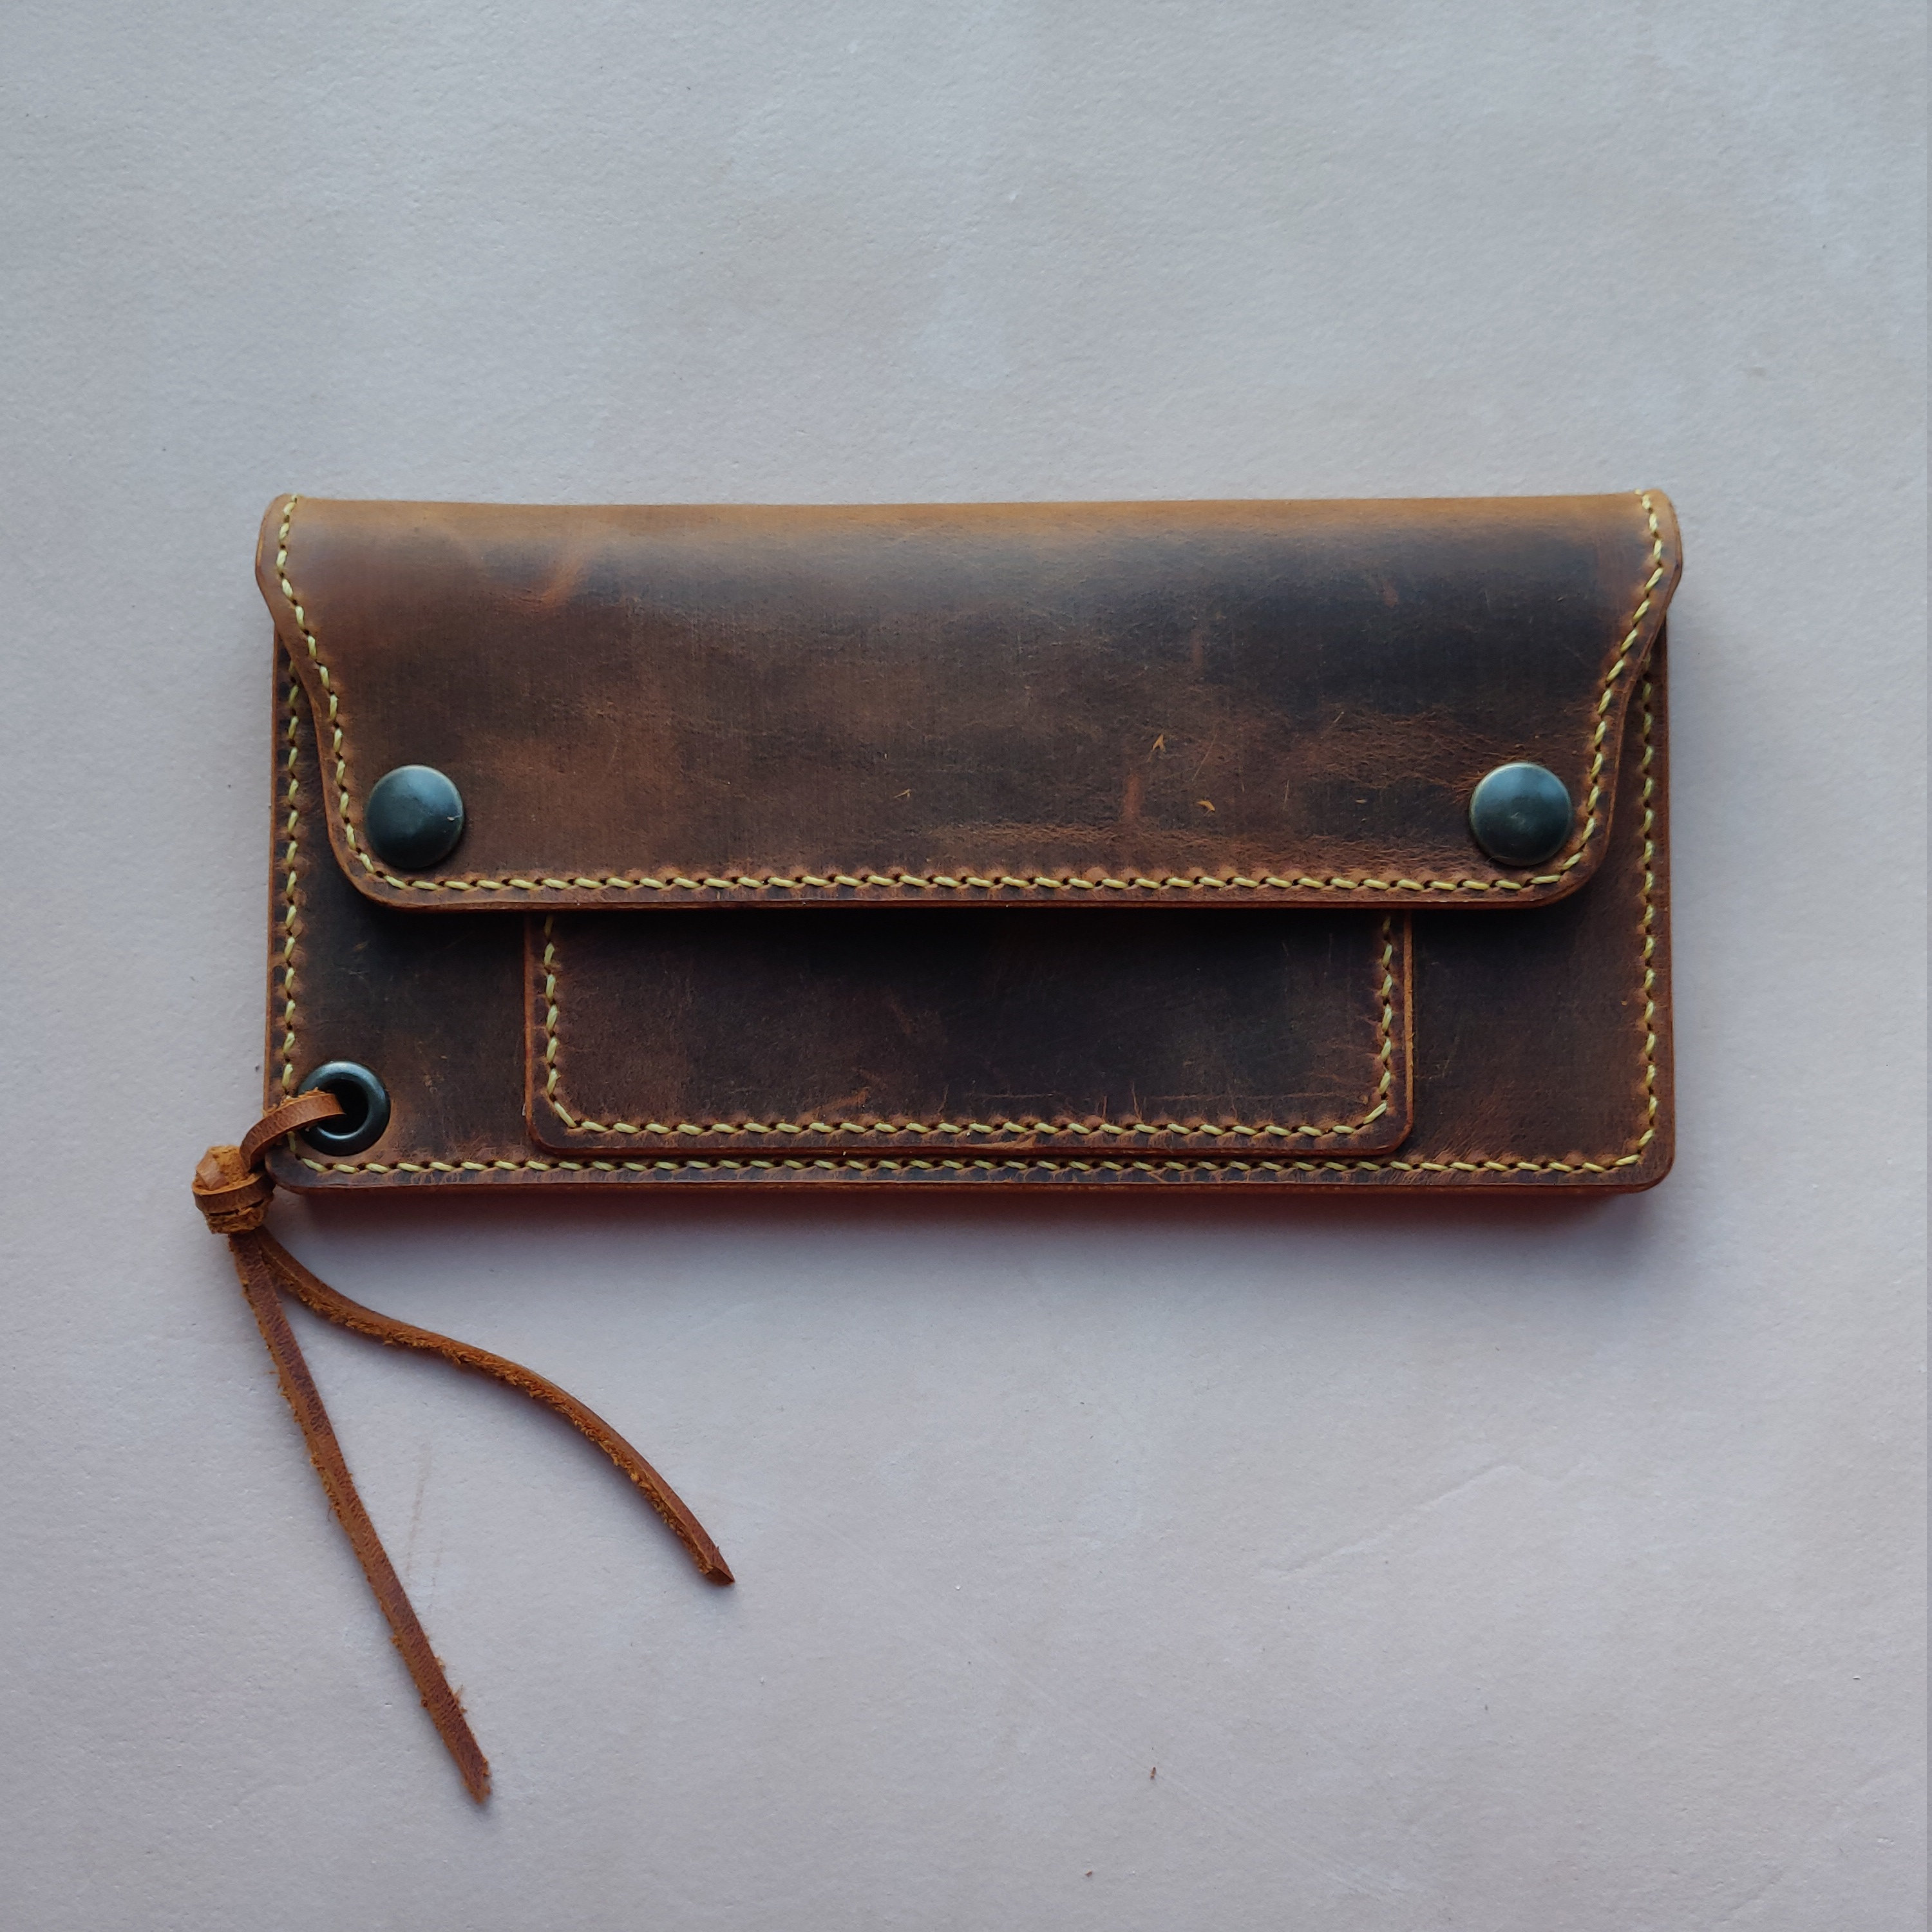 Handmade Genuine Leather Wallet Men Long Wallet Money Purse Card Holder 196-1